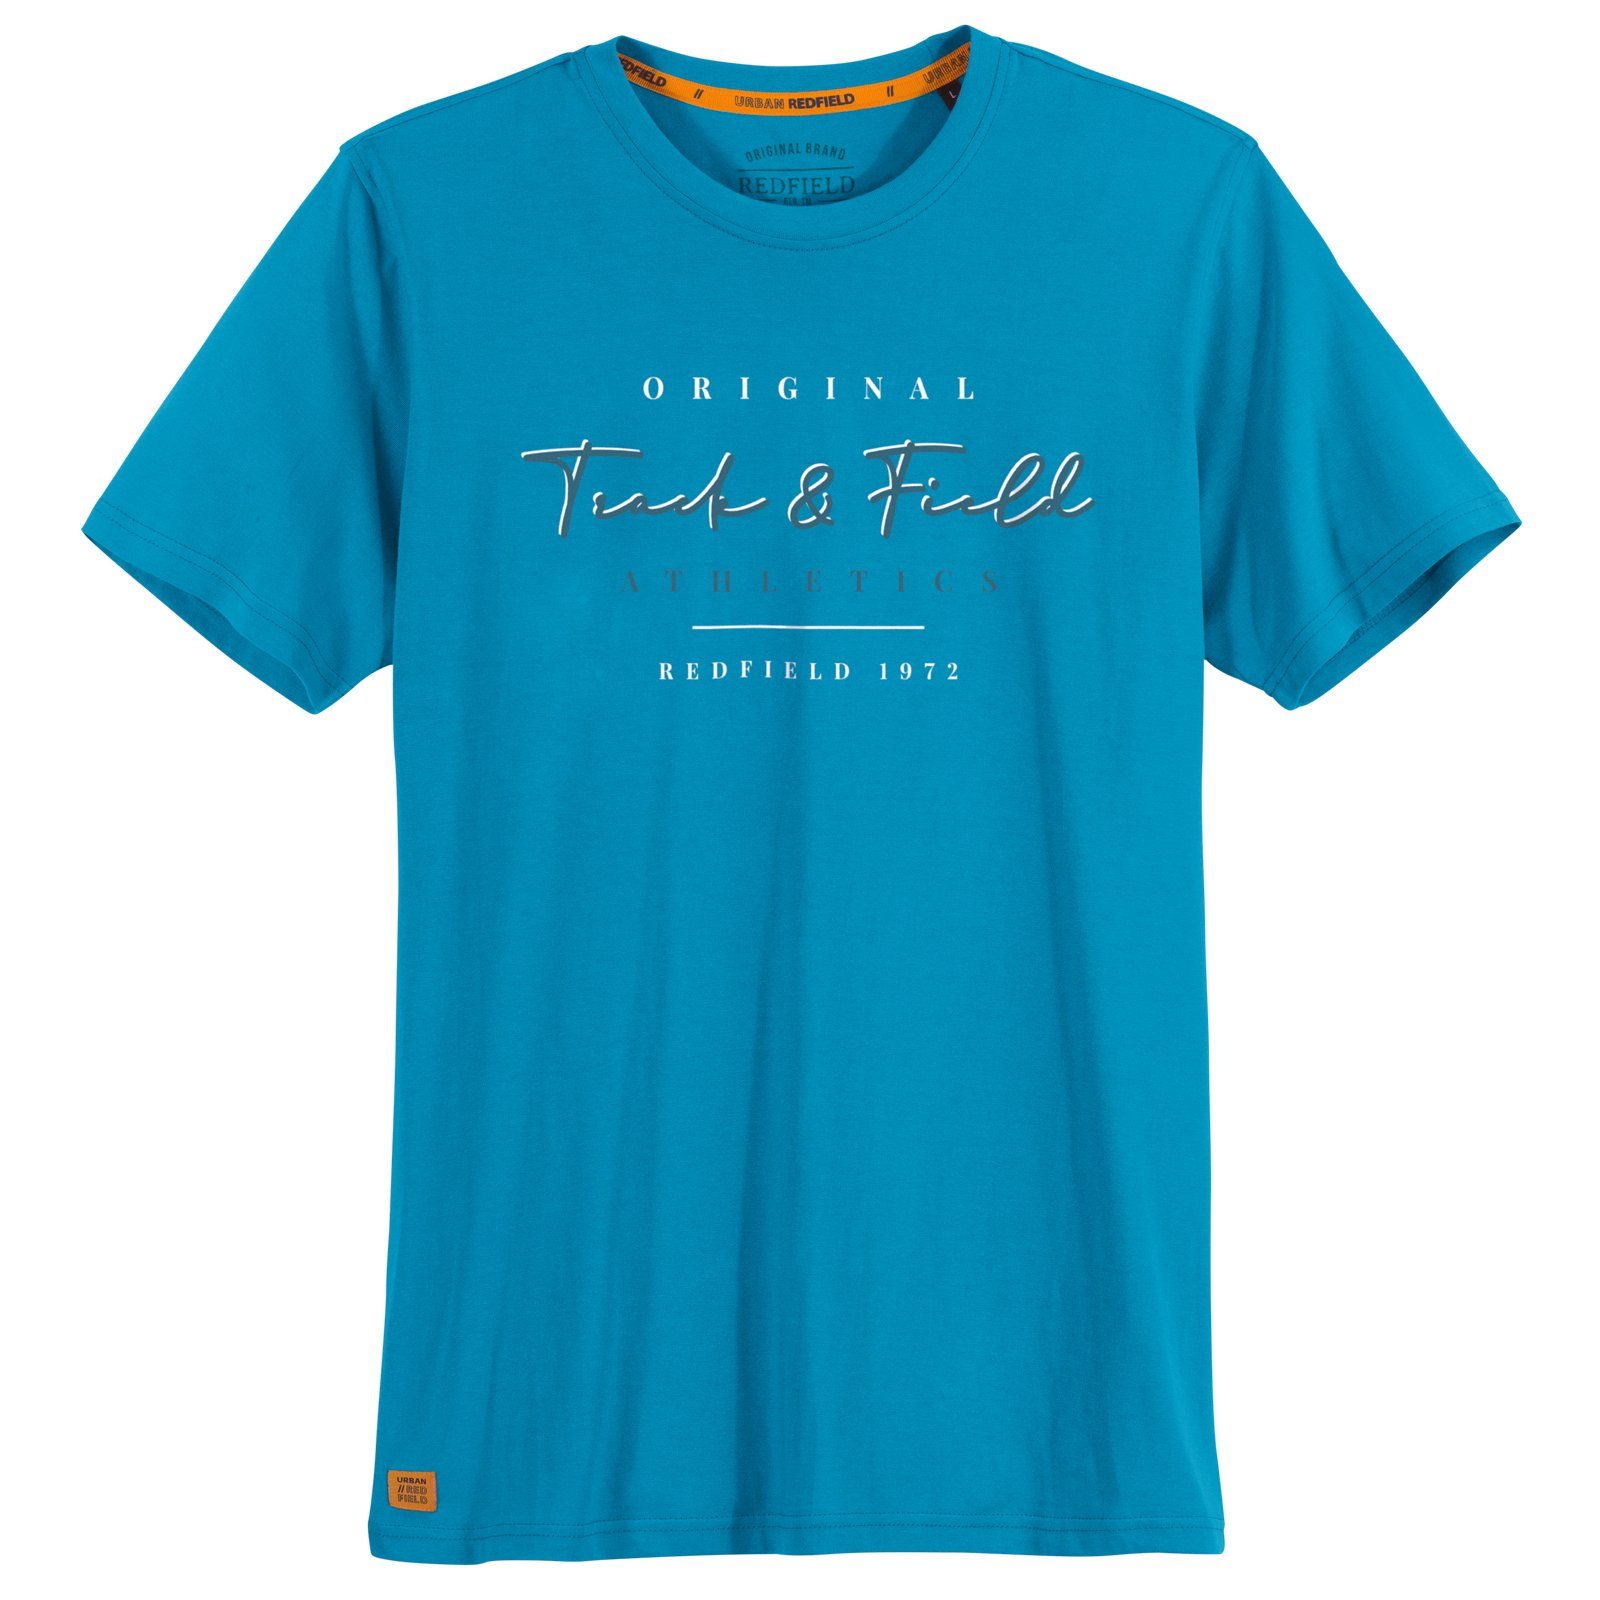 redfield Print-Shirt Große Größen Herren T-Shirt türkisblau Schriftprint Redfield